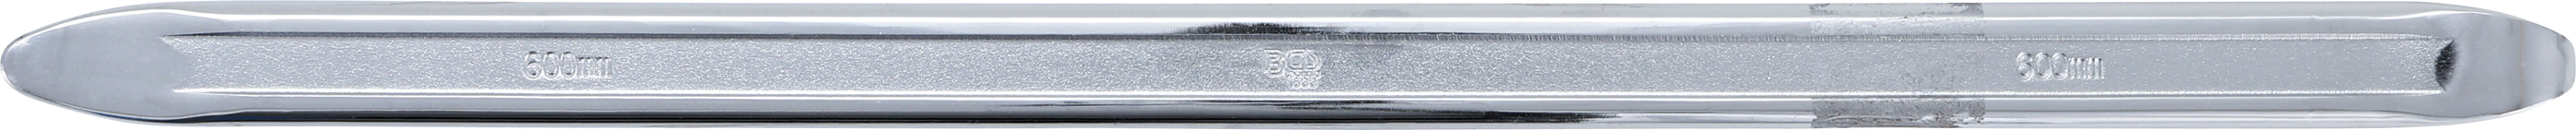 BGS 1533  Levier pentru vulcanizare, 600mm